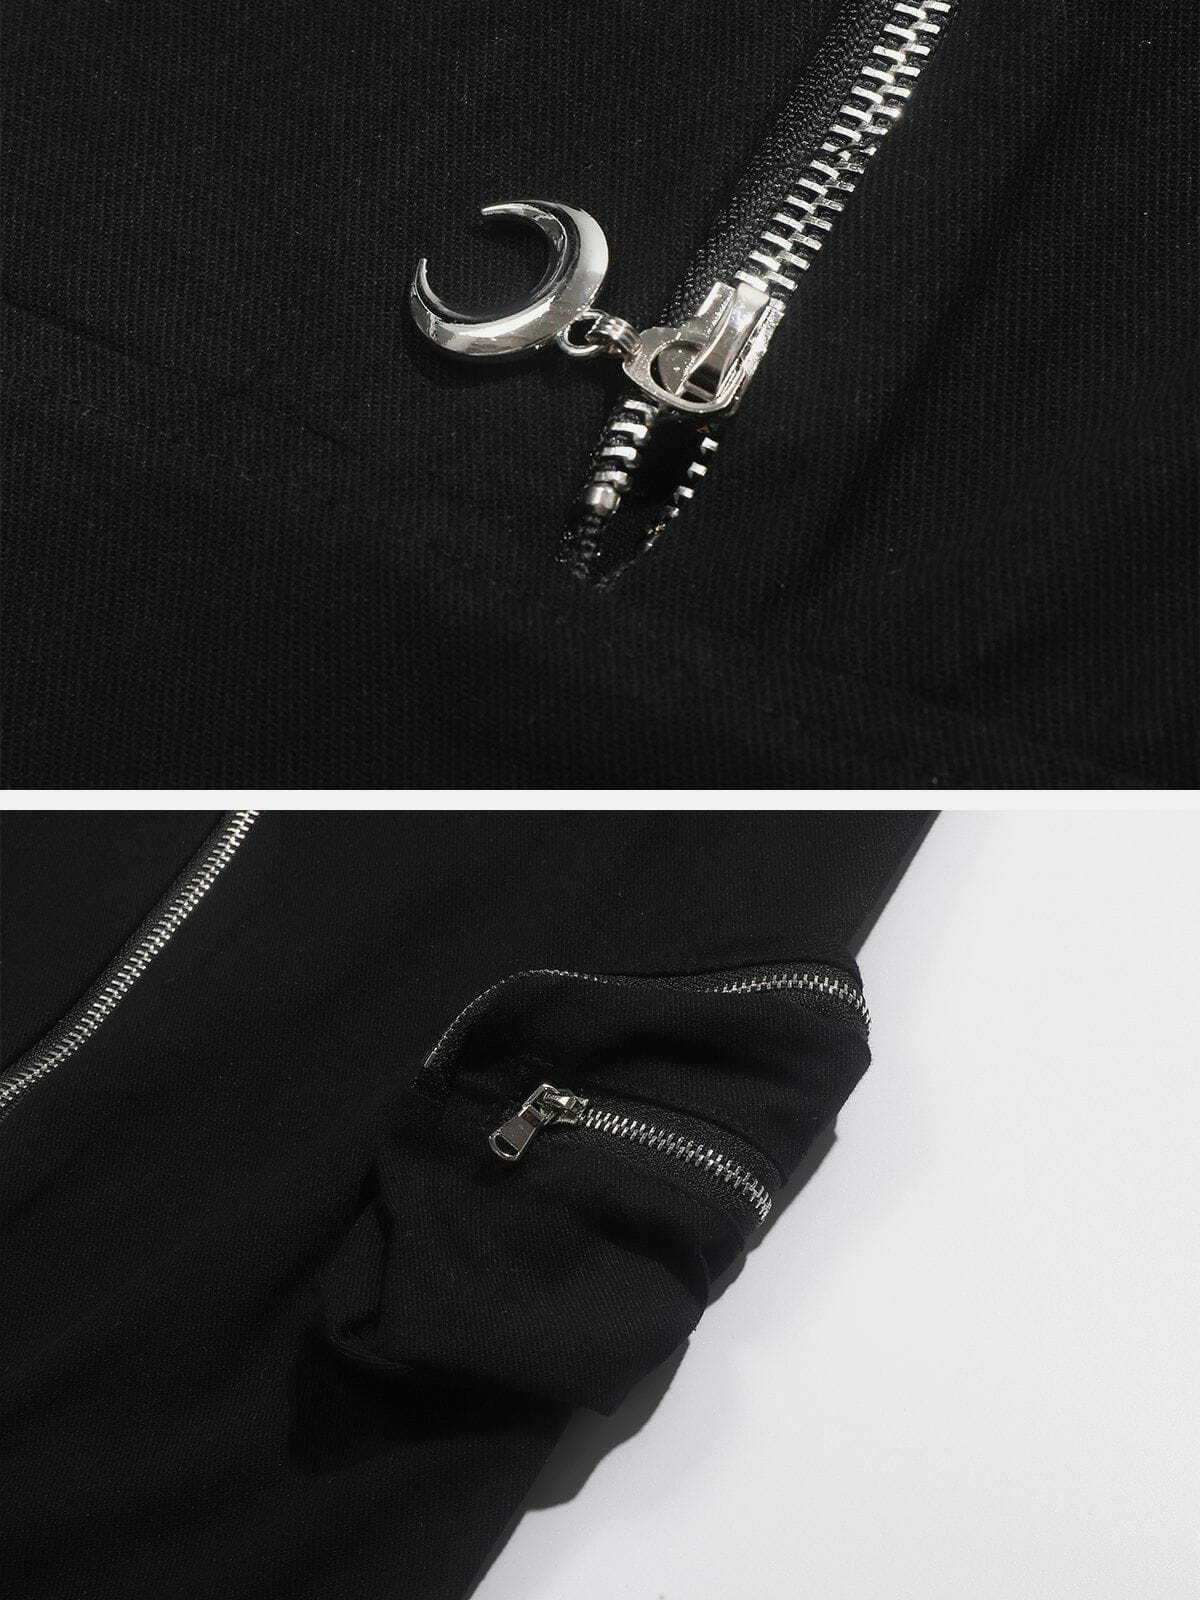 loose pants with zipper detail edgy & versatile streetwear 7534